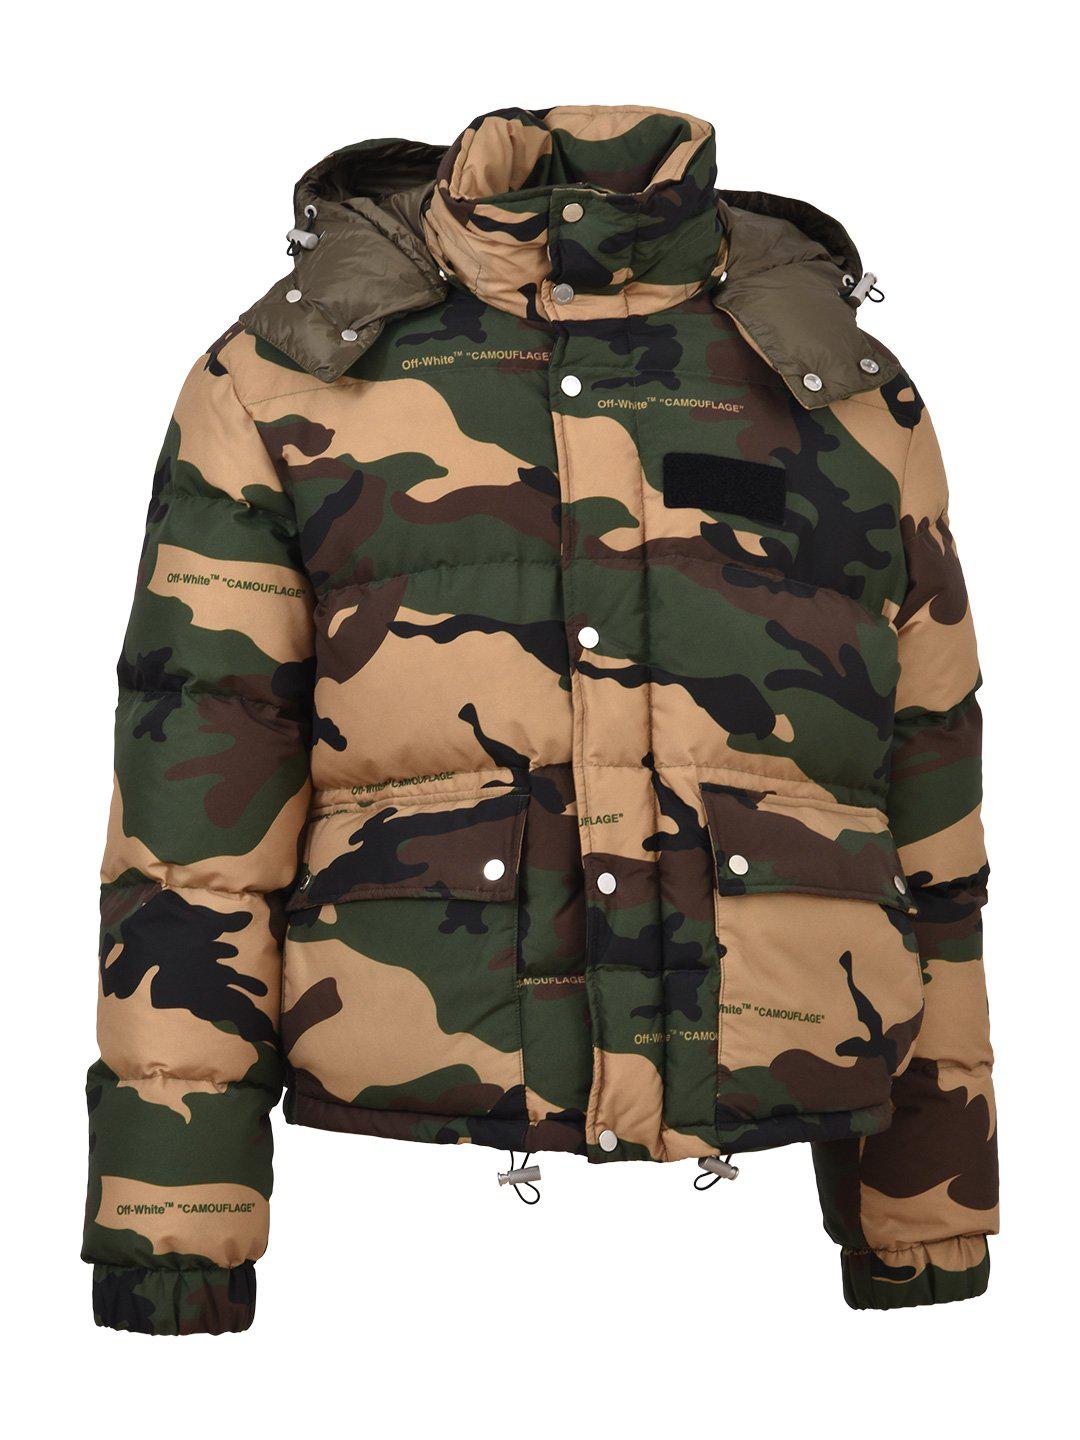 Off-White c/o Virgil Abloh Camouflage Puffer Jacket for Men